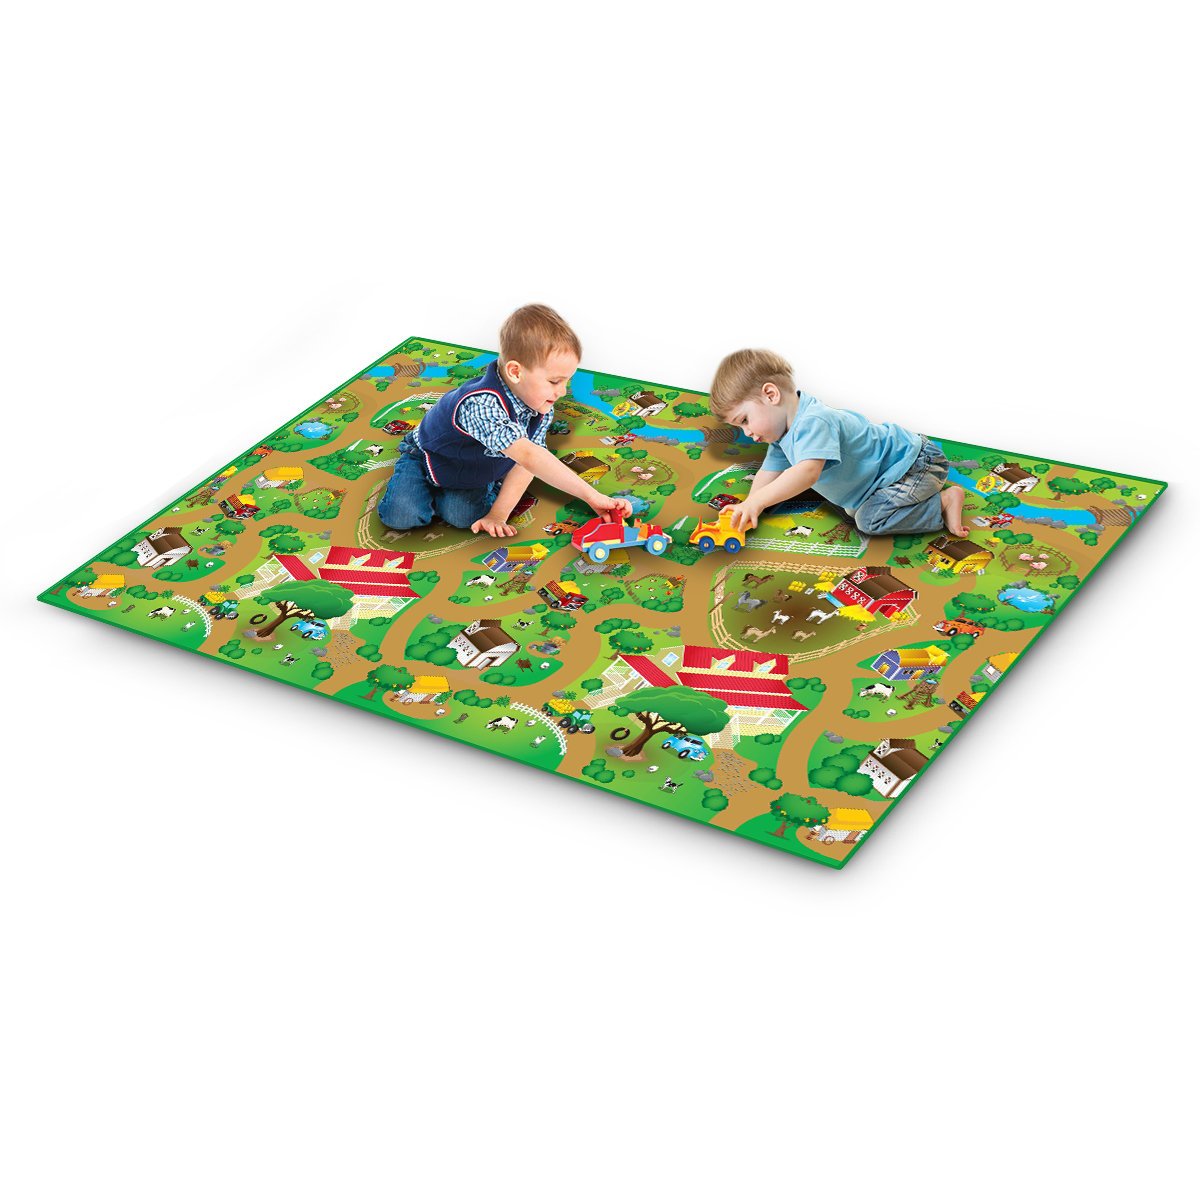 Rollmatz Farm Design Baby Kids Floor Play Mat 200cm x 120cm 2